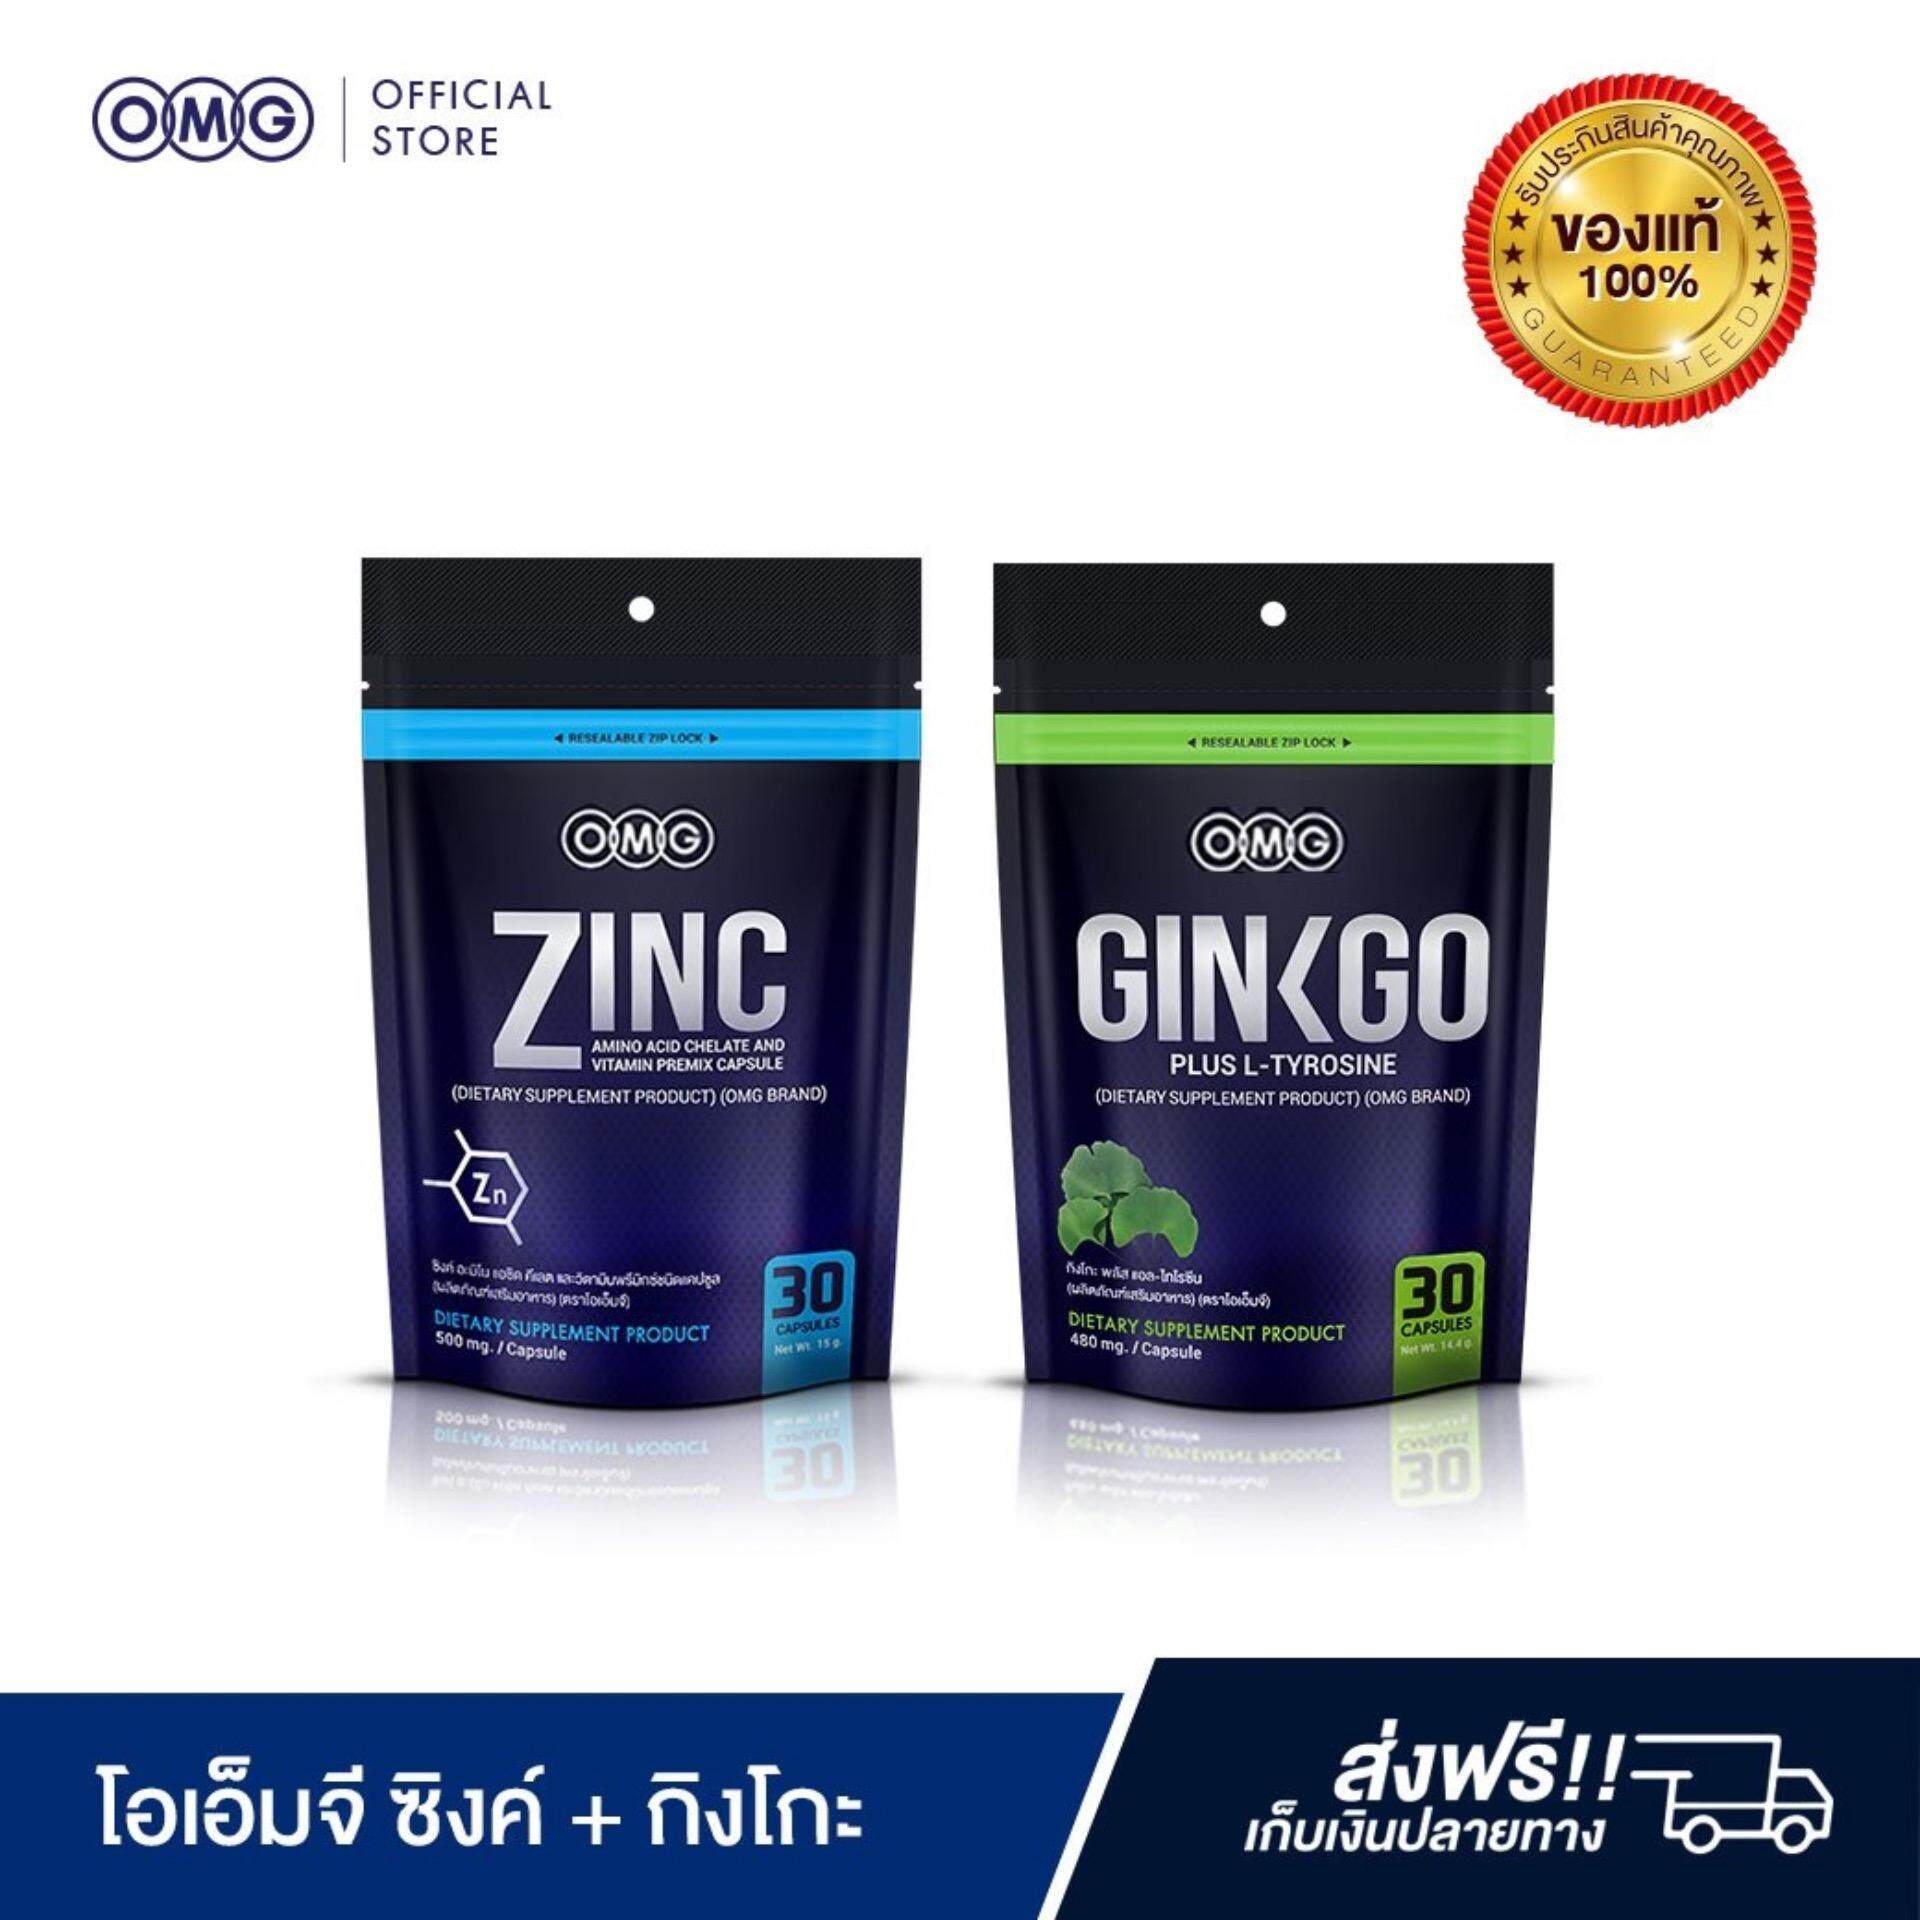 OMG Ginkgo plus L-Tyrosine 30 แคปซูล + OMG Zinc Amino Acid 30 แคปซูล อาหารเสริมฟื้นฟูผิวหน้าและสมอง วิตามินสมอง ระบบประสาท ใบแปะก๊วย , สิว การหลุดร่วงผม ซิงค์